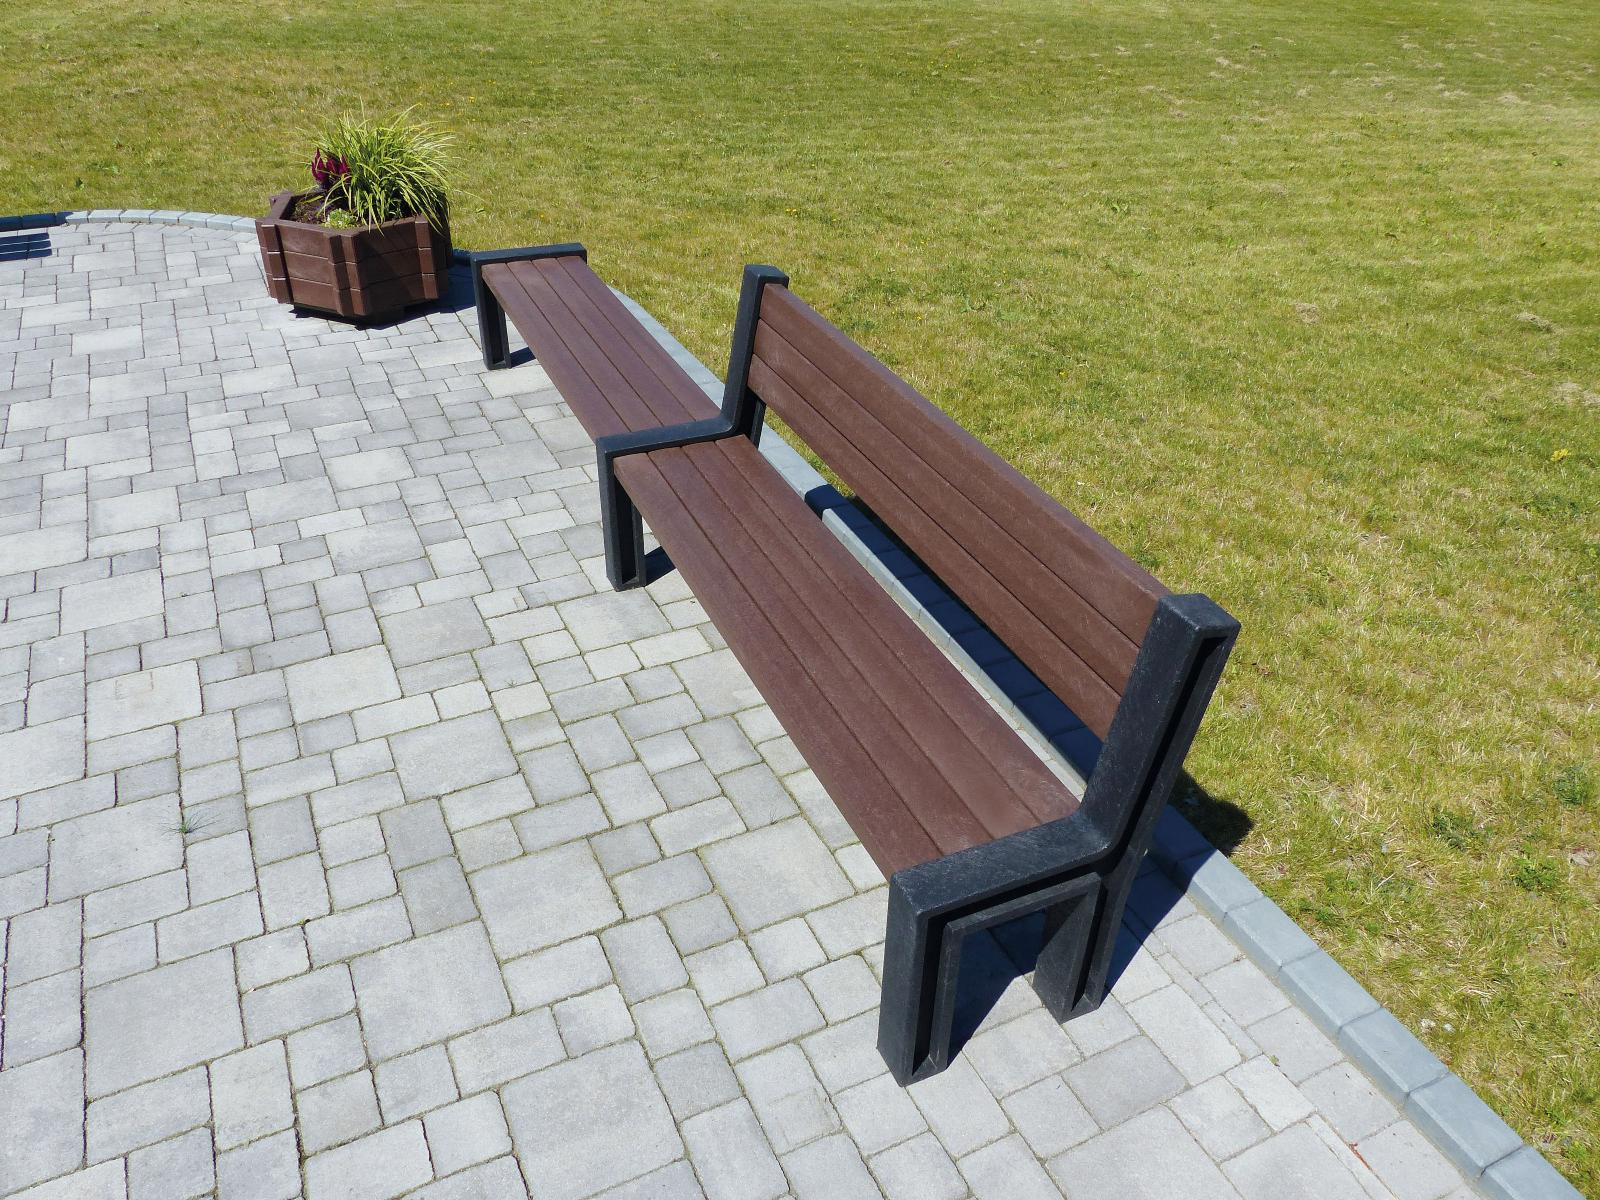 Hyde Park bench extension module